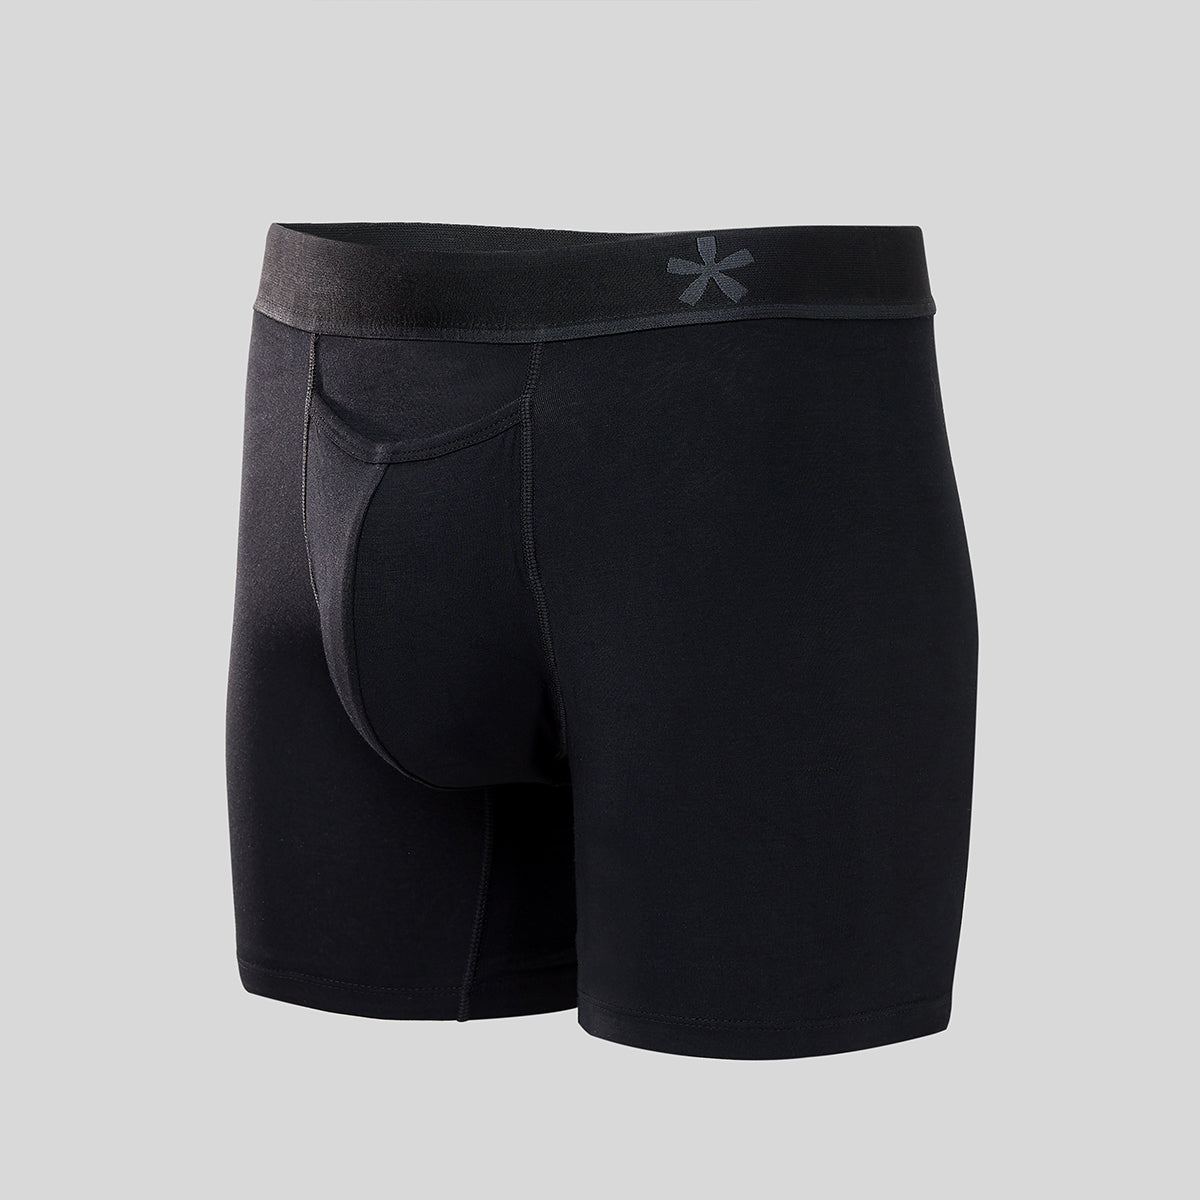 Mens Underwear Boxer Briefs Pack Boxers Underpants Solid Black L 1-Pack